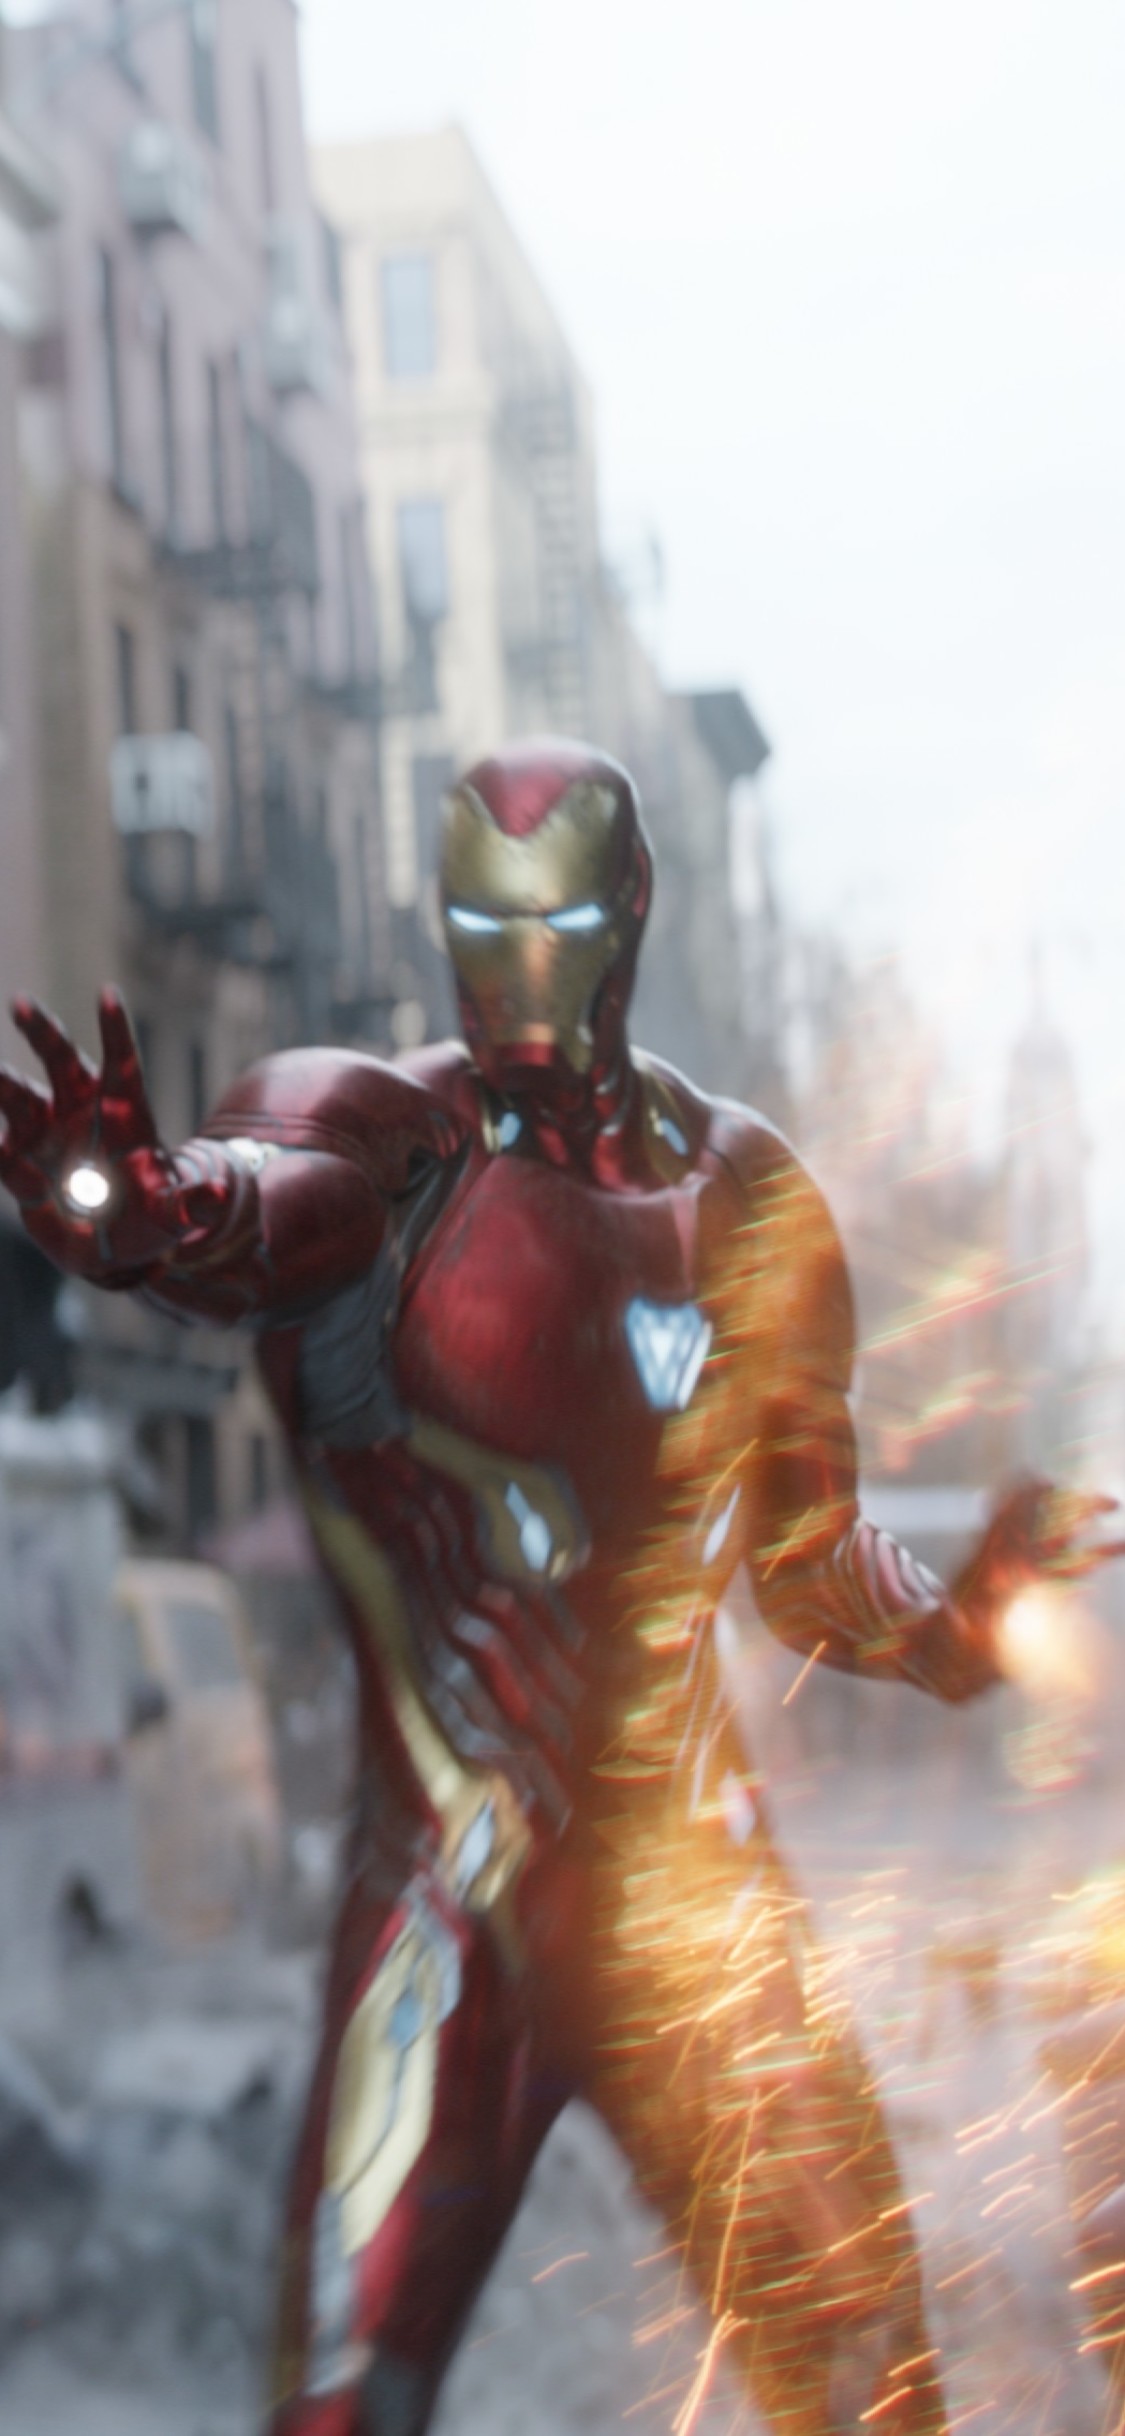 Avengers Infinity War Iron Man Doctor Strange - HD Wallpaper 